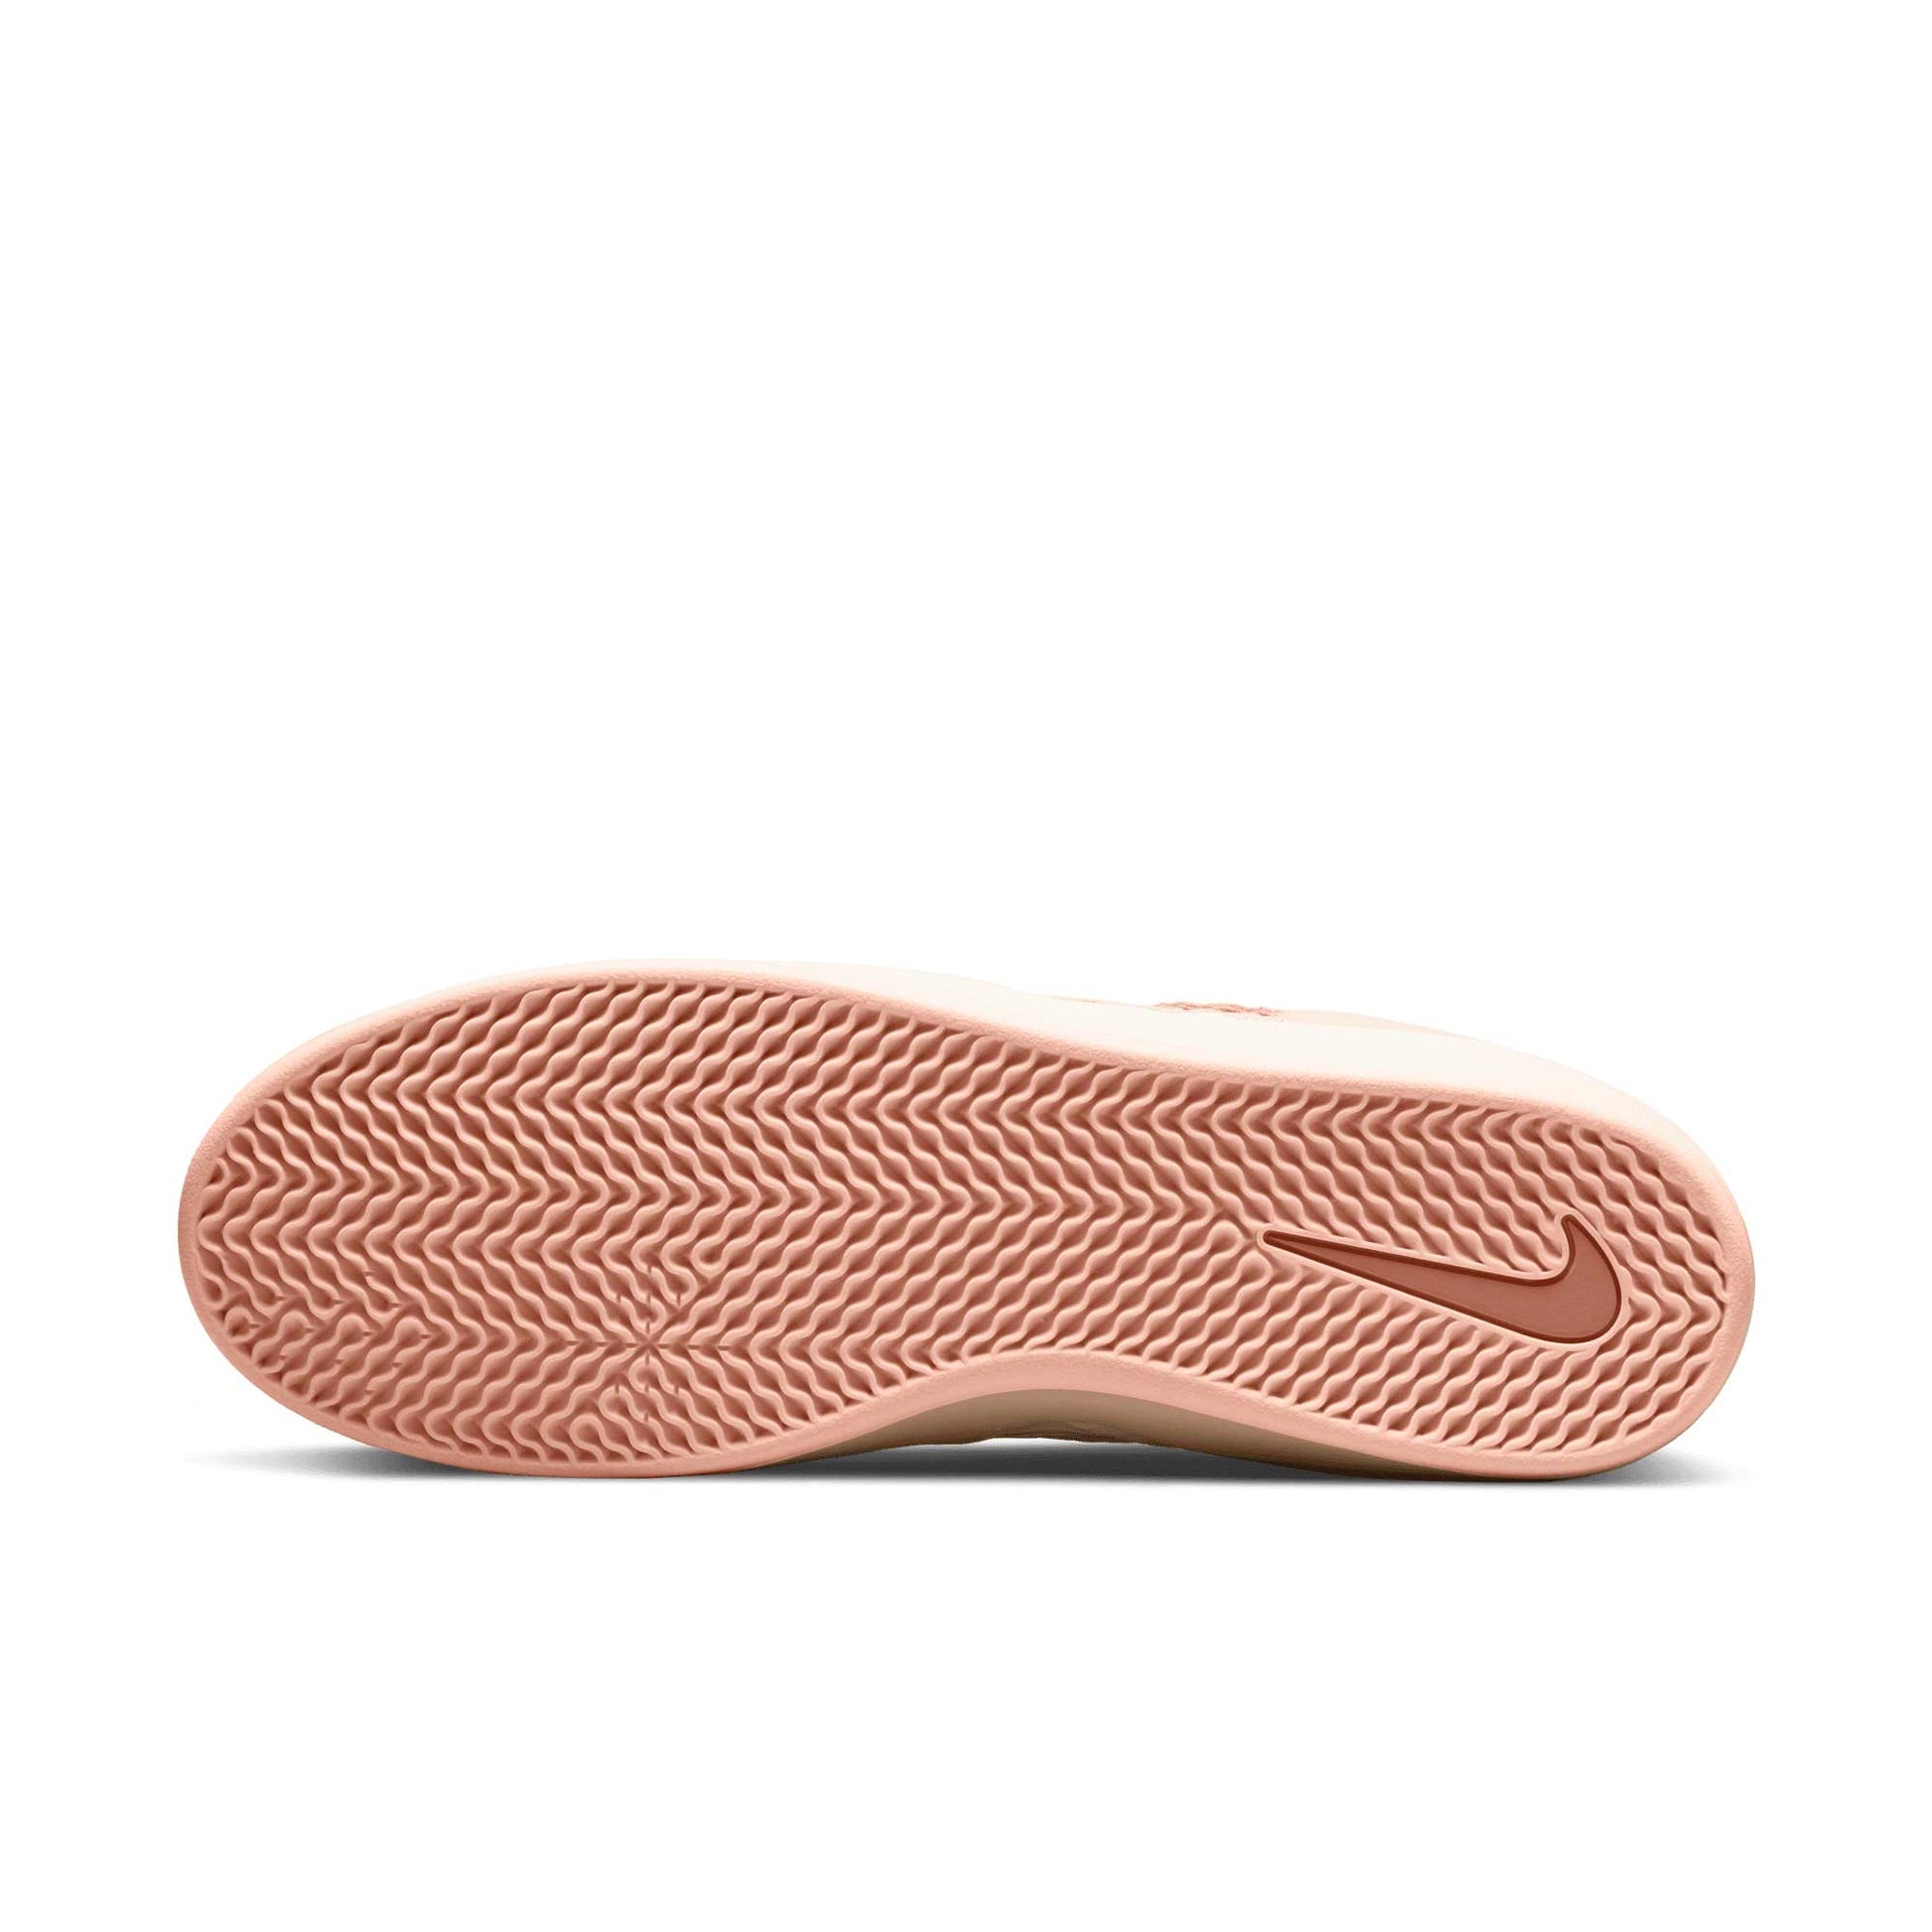 Nike SB Ishod Wair, rattan/arctic orange-light soft pink - Tiki Room Skateboards - 5